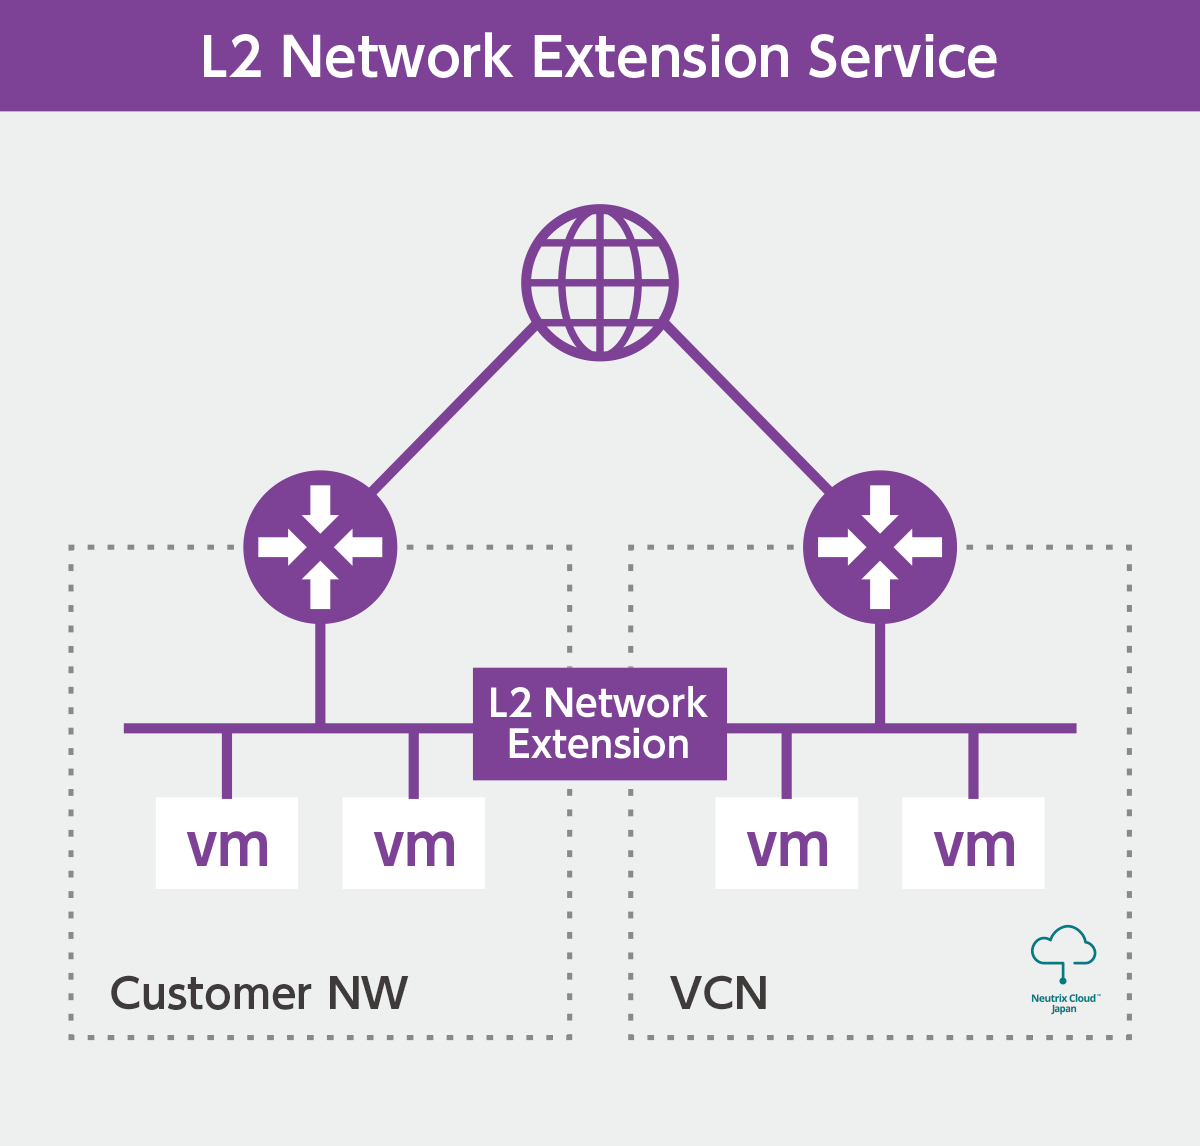 L2 Network Extension Service